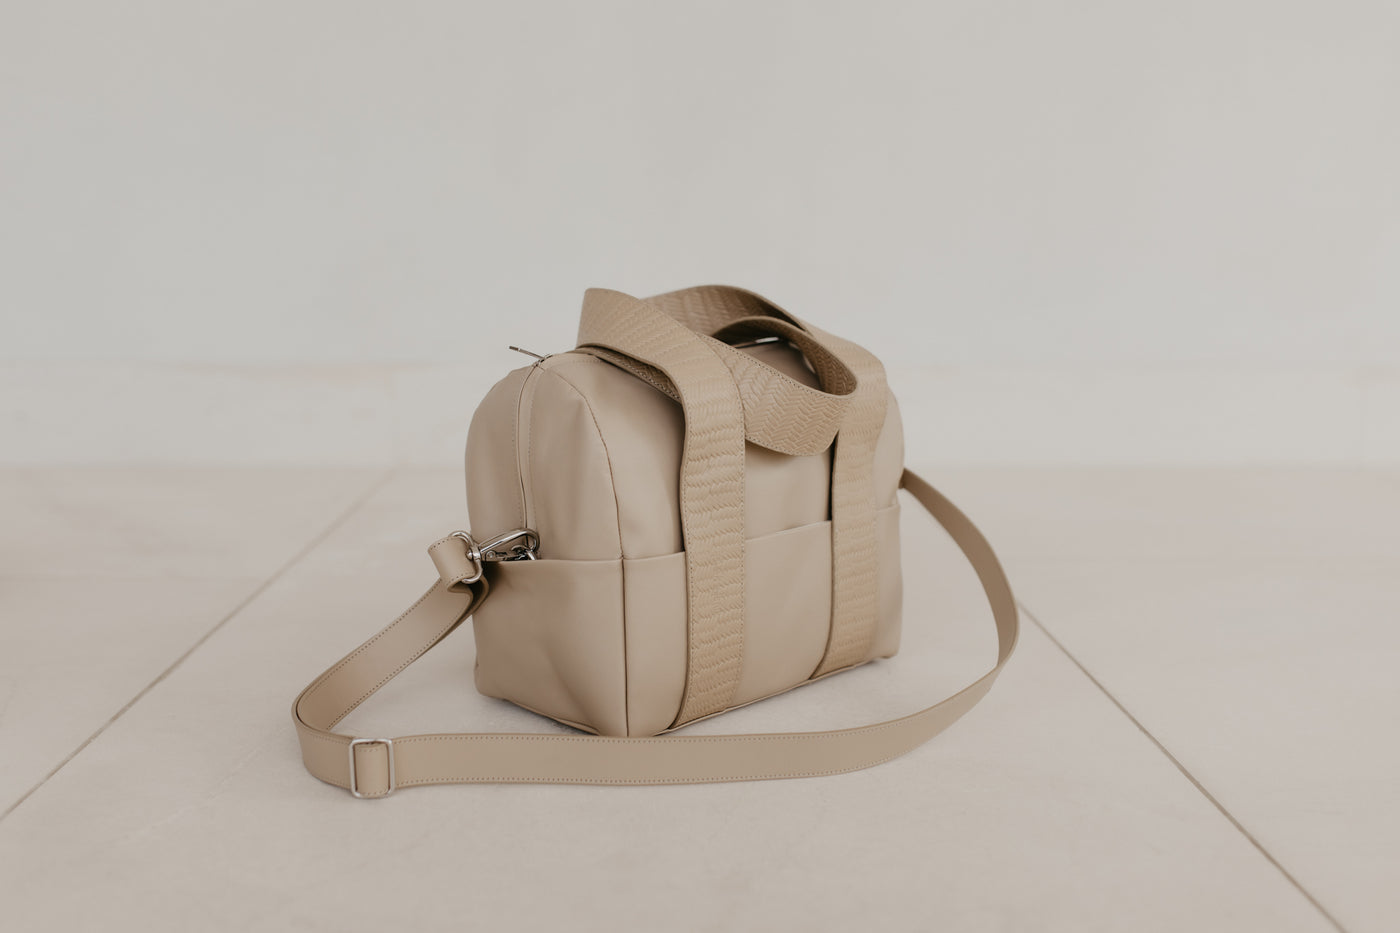 Mini Bowling Bag | Beige / Woven